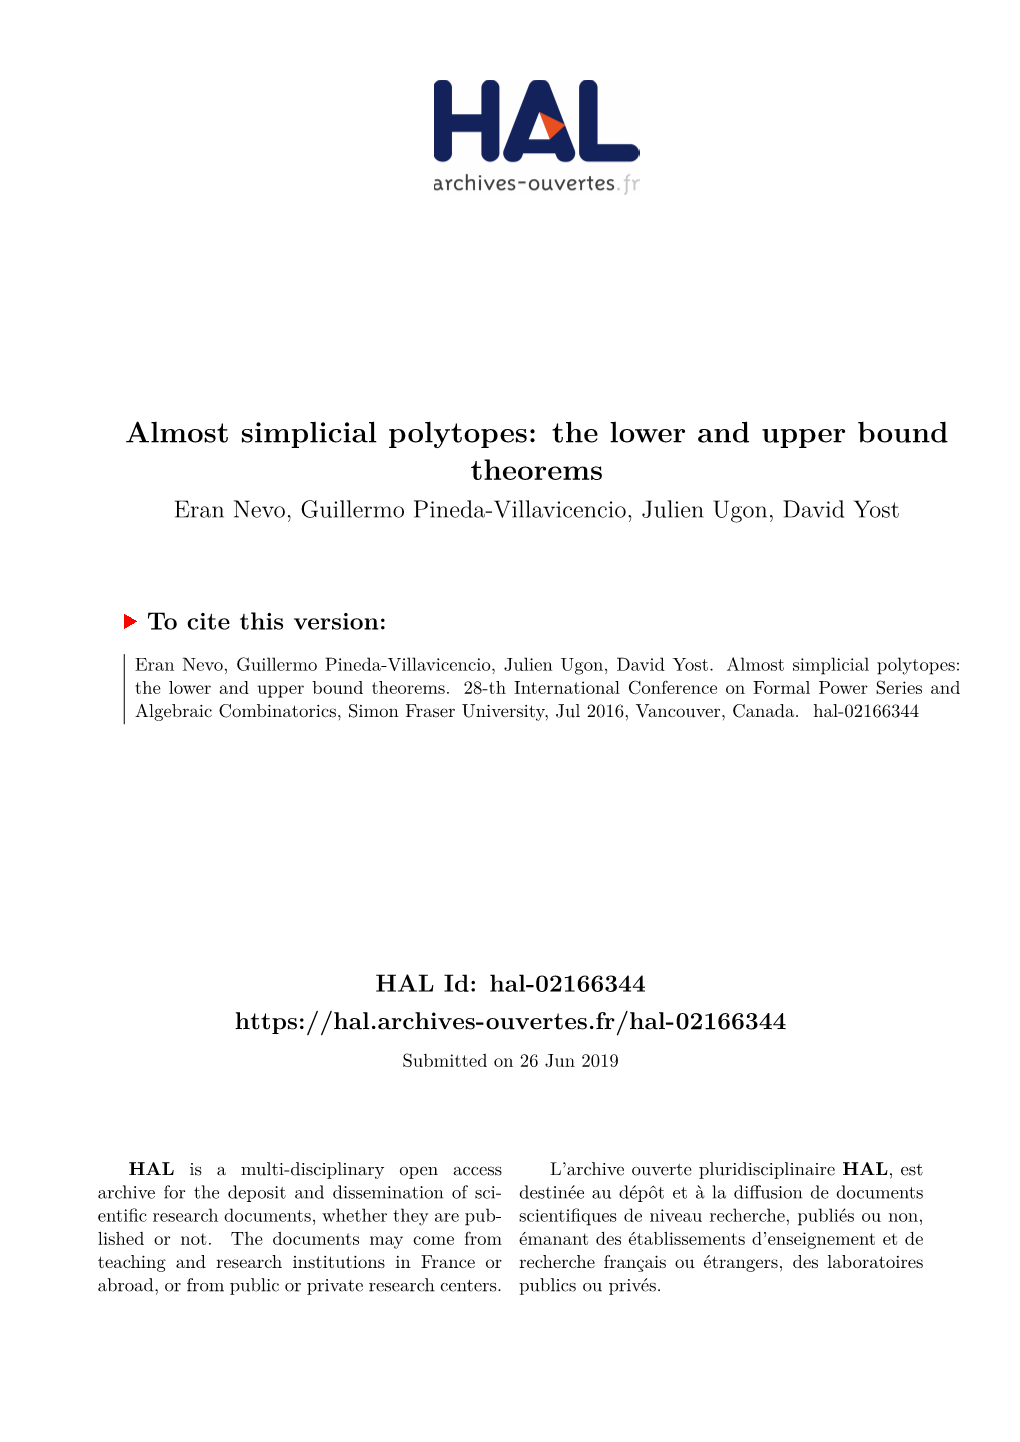 Almost Simplicial Polytopes: the Lower and Upper Bound Theorems Eran Nevo, Guillermo Pineda-Villavicencio, Julien Ugon, David Yost